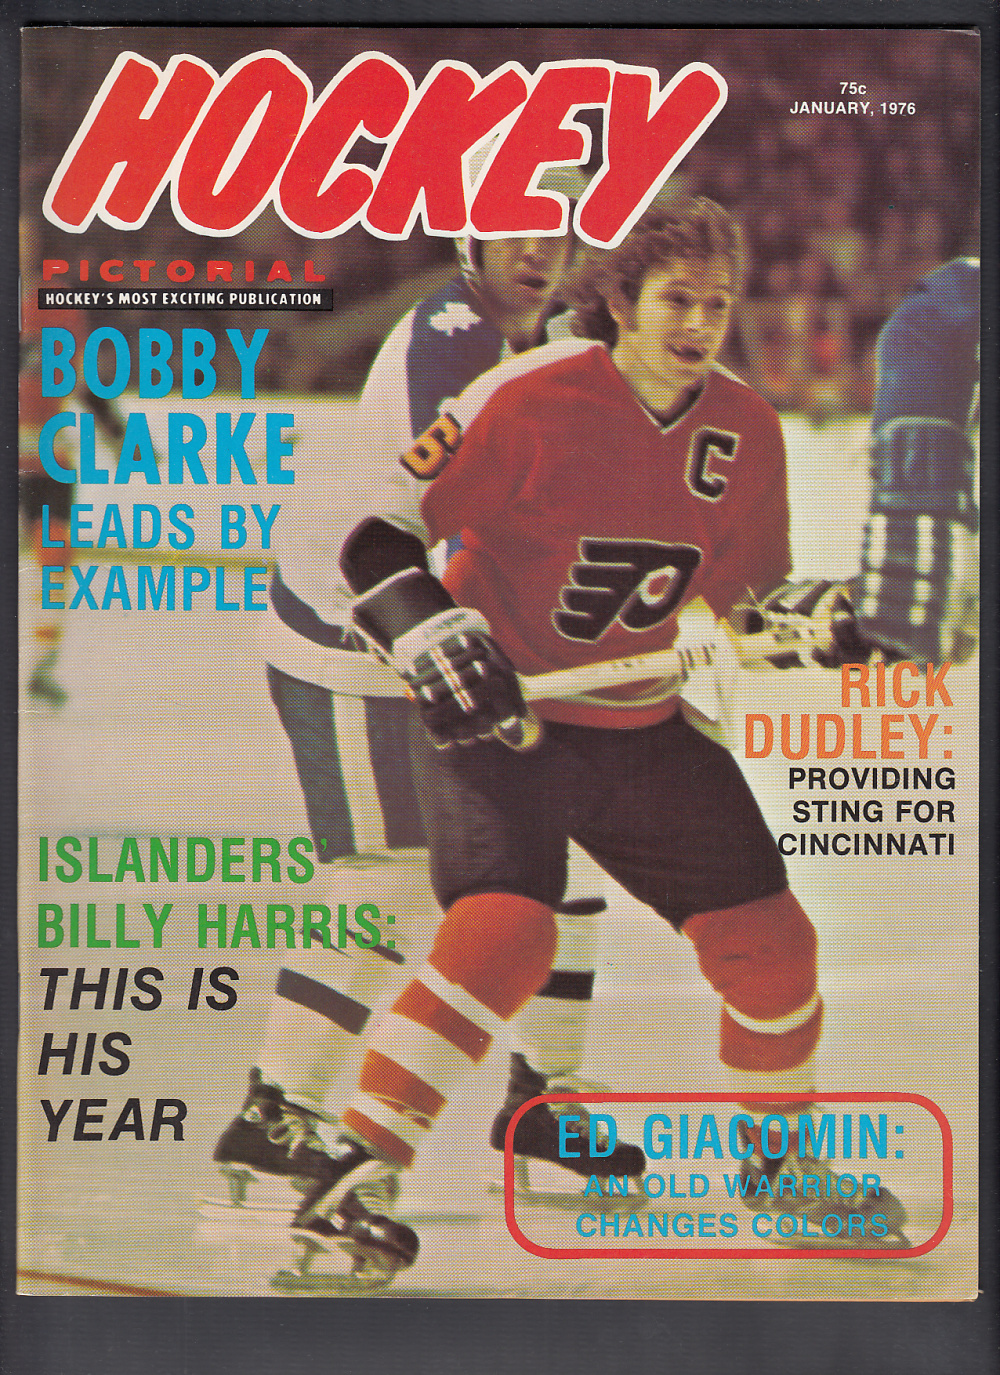 1976 HOCKEY PICTORIAL MAGAZINE B. CLARKE ON COVER photo